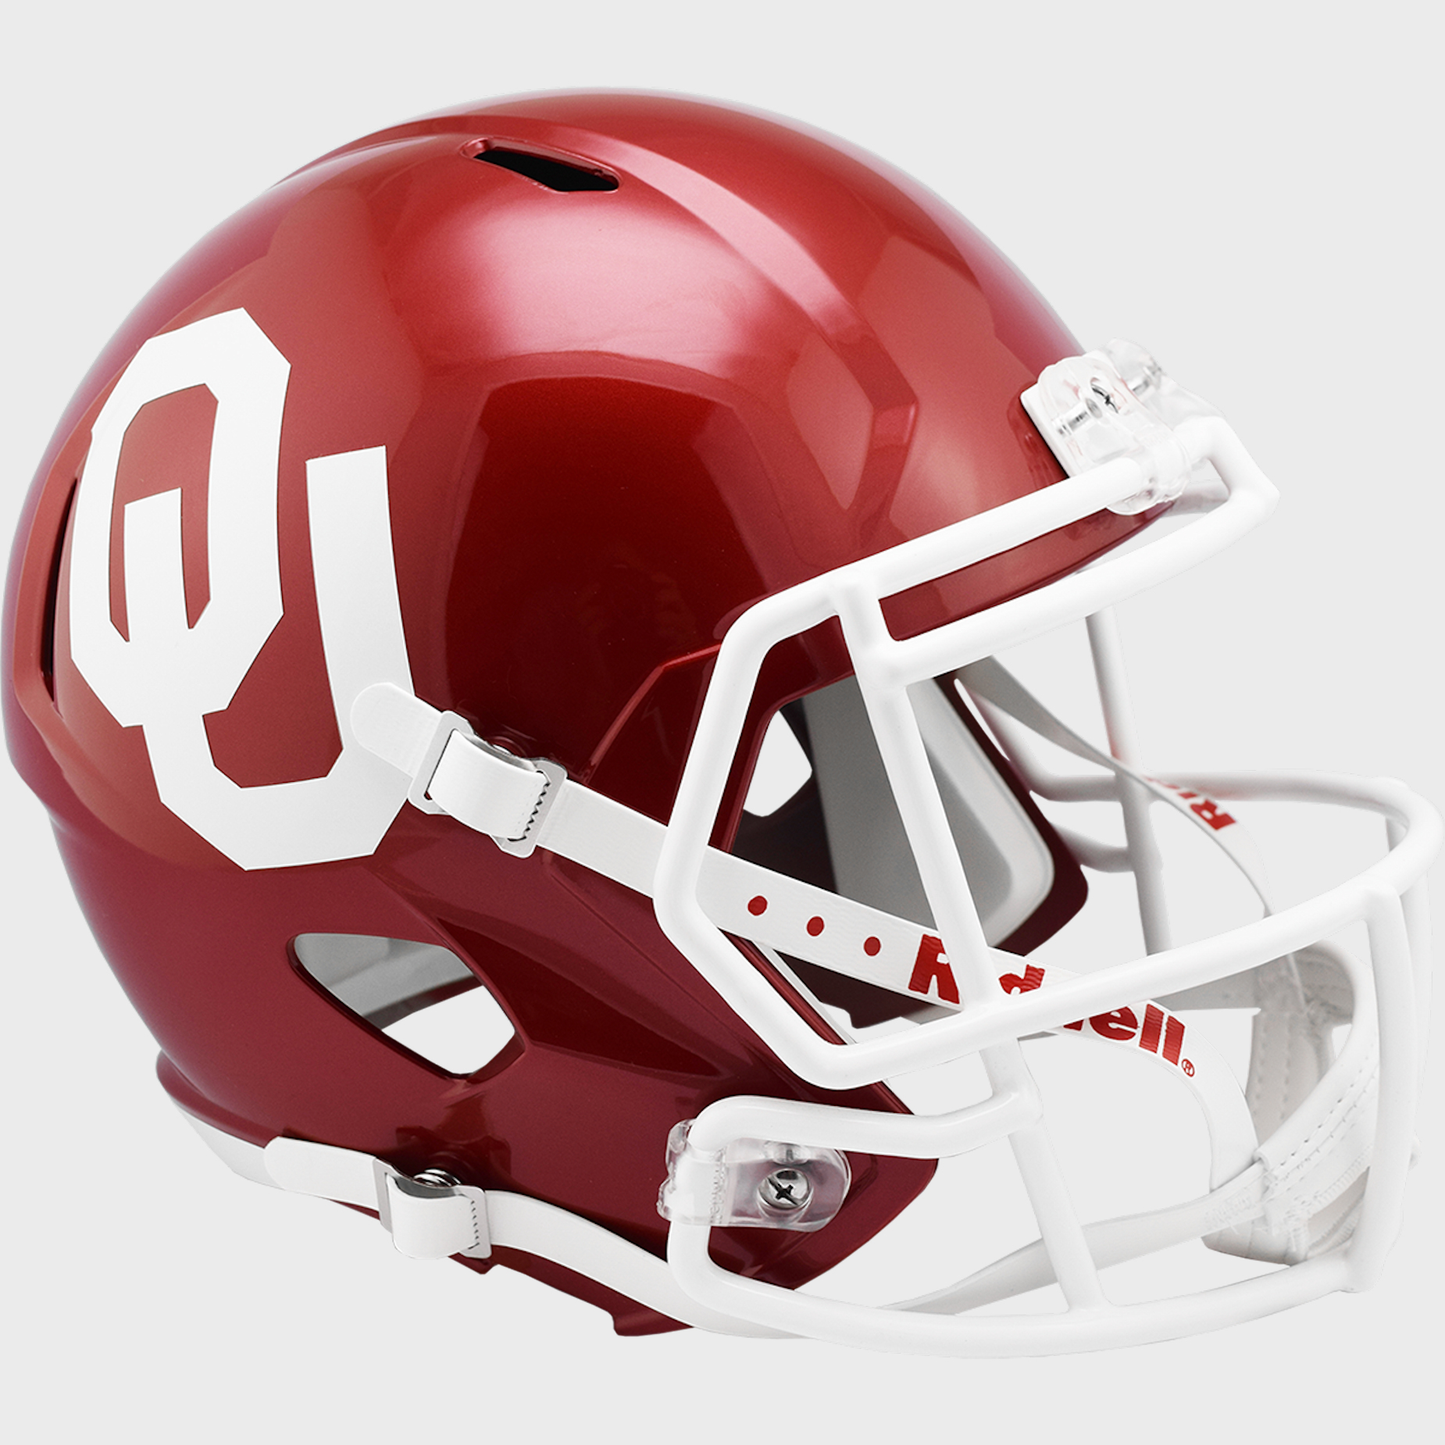 Oklahoma Sooners full size replica helmet